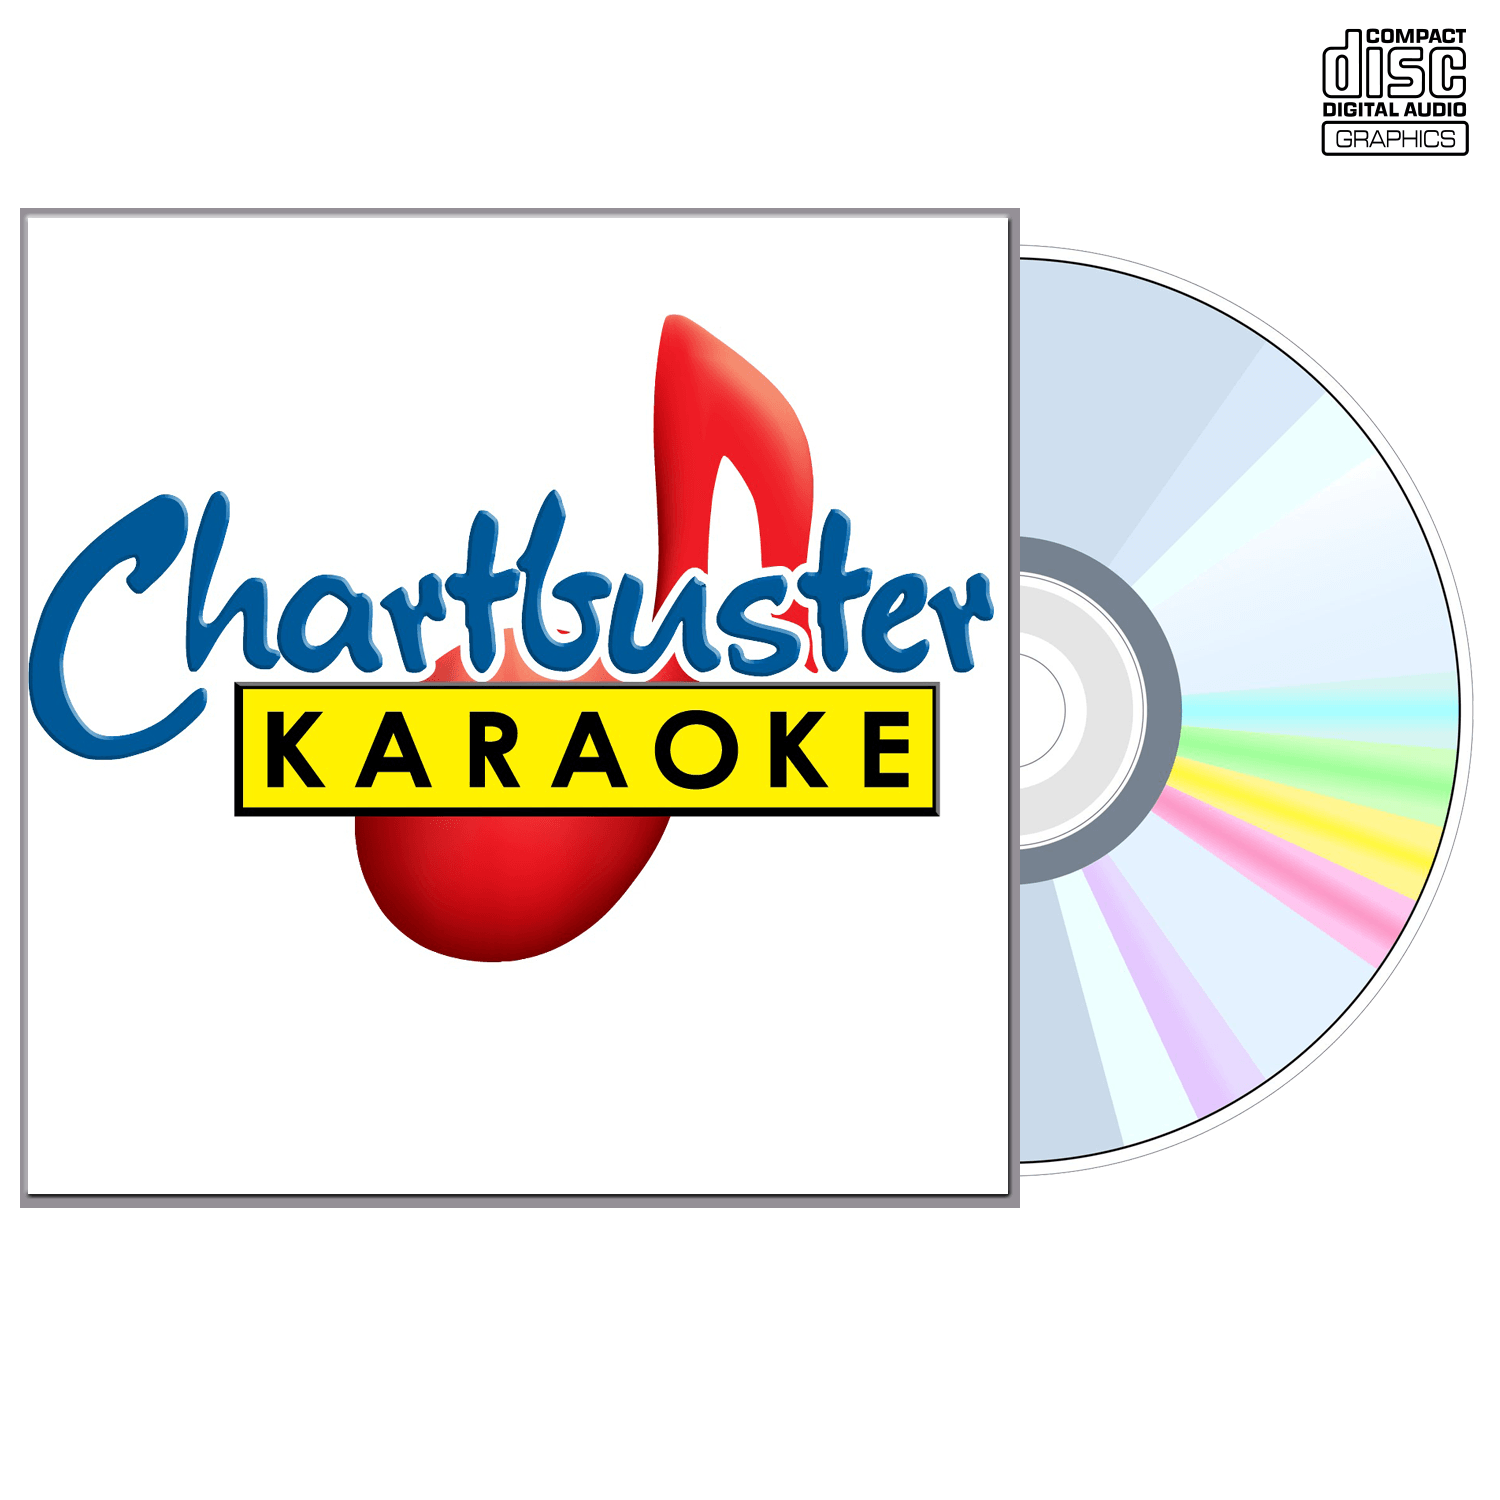 Ronnie Milsap Vol 3 - CD+G - Chartbuster Karaoke - Karaoke Home Entertainment